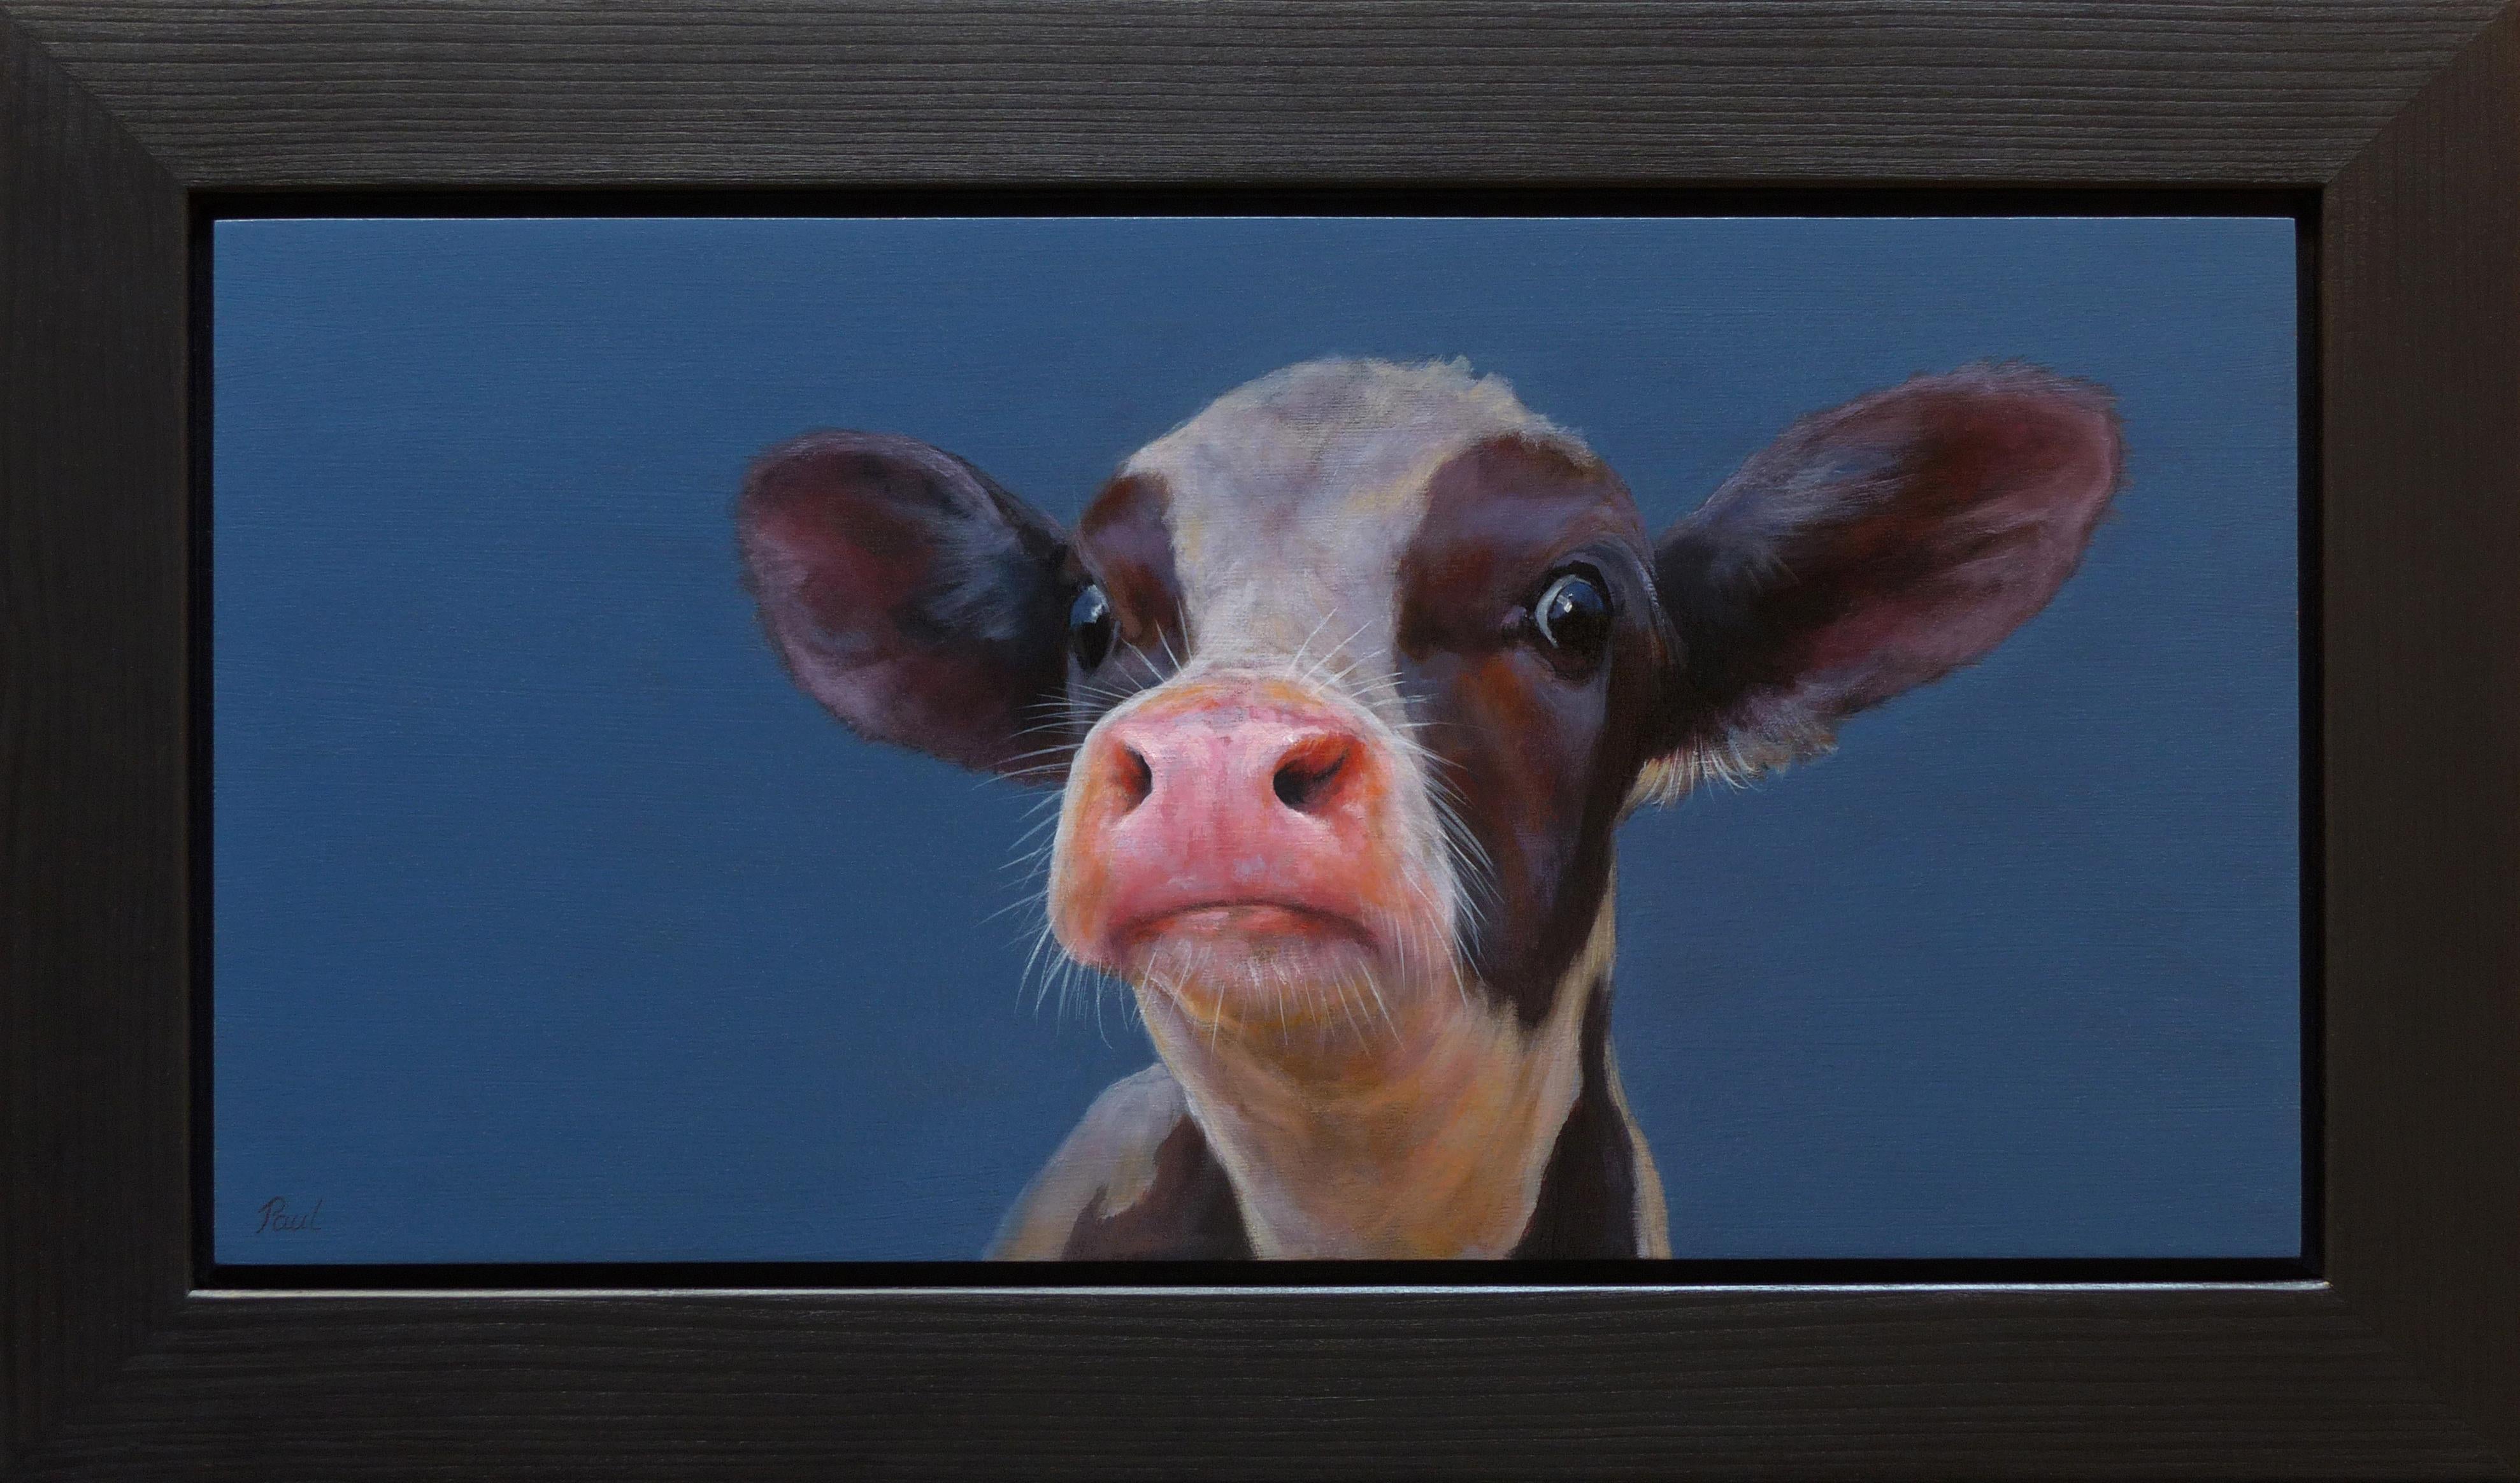 Paul Jansen Animal Painting - "Brown Calf" Contemporary Dutch Oil Painting of a Brown Calf, Cow